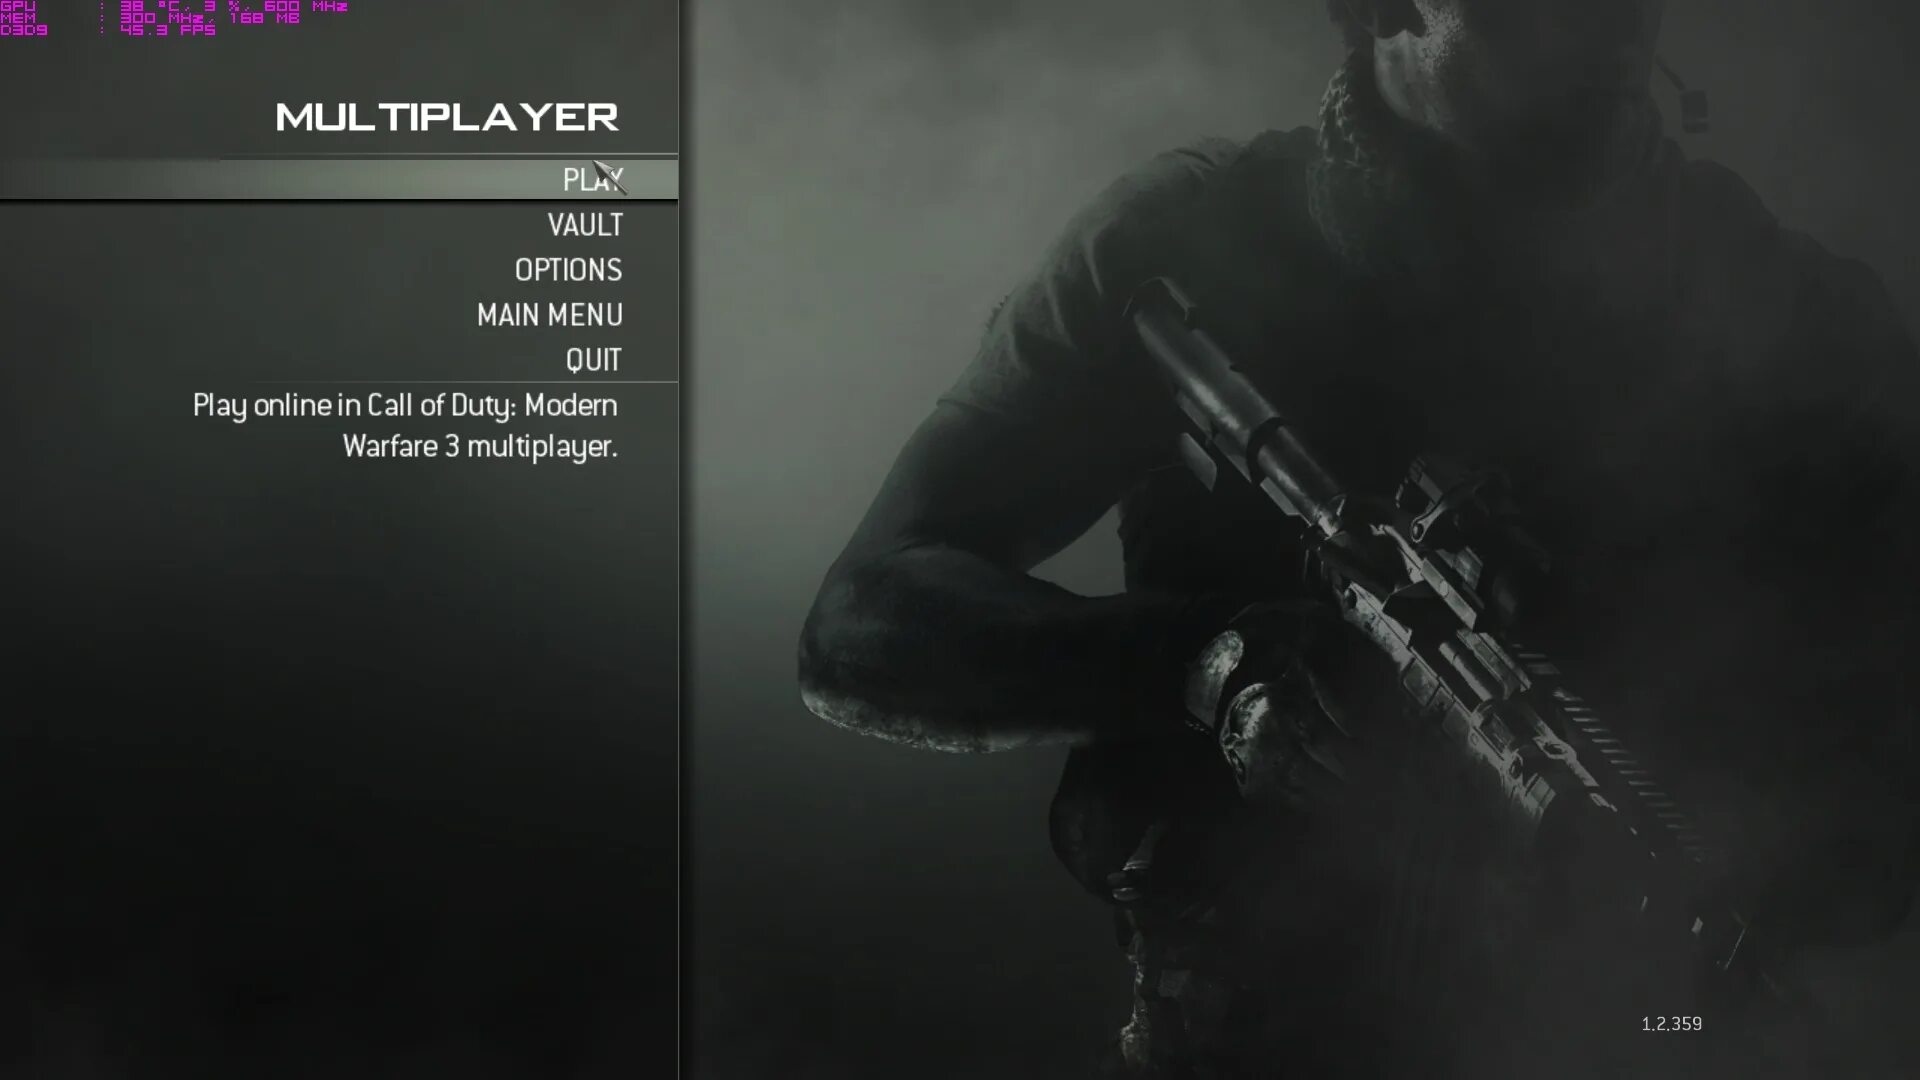 Call of Duty Modern Warfare 3 главное меню. Call of Duty 4 Modern Warfare главное меню. Cod MW 3 главное меню. Мультиплеер для mw3. Games main menu